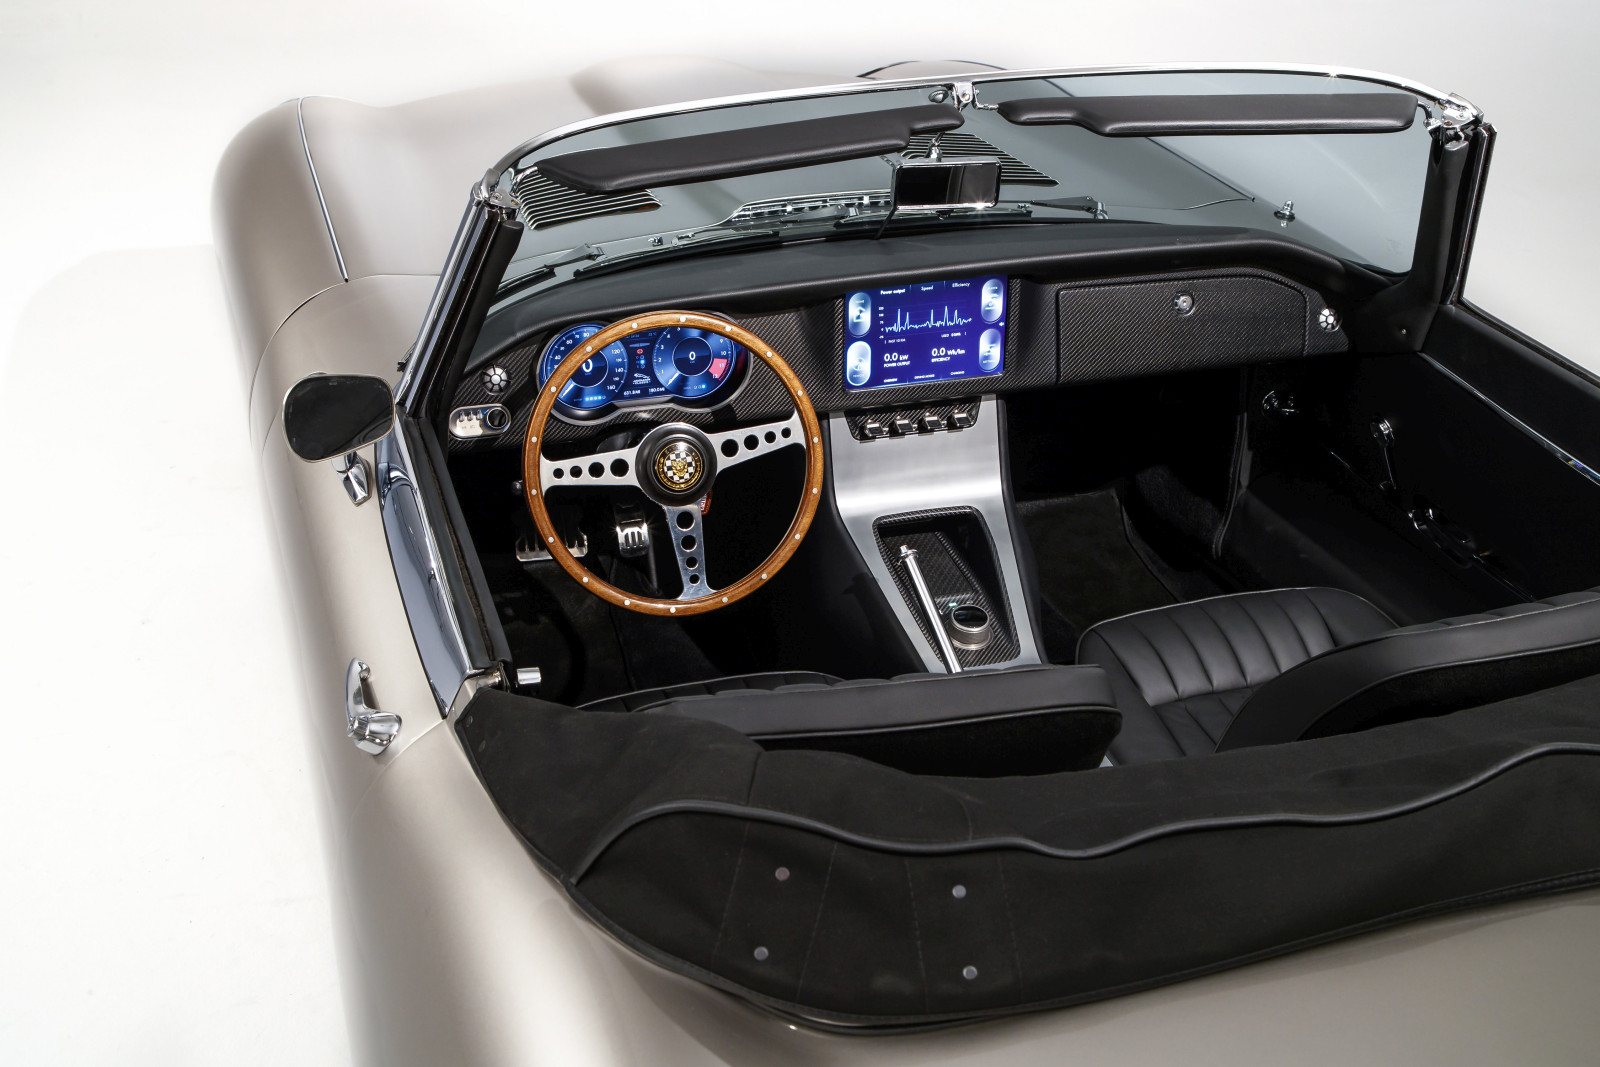 Jaguar Classic E-type Zero Concept